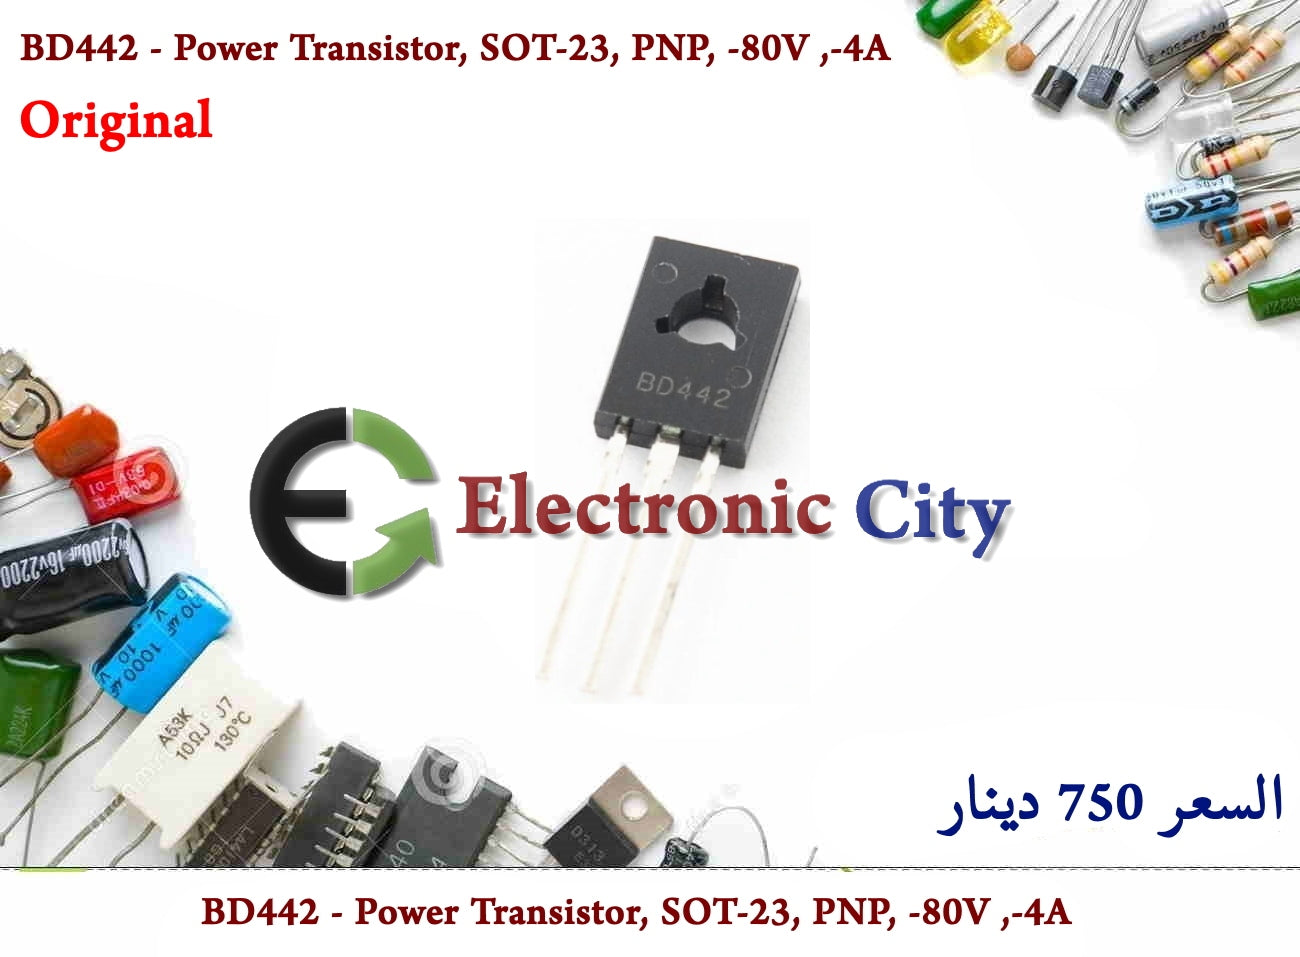 BD442 - Power Transistor, SOT-23, PNP, -80V ,-4A